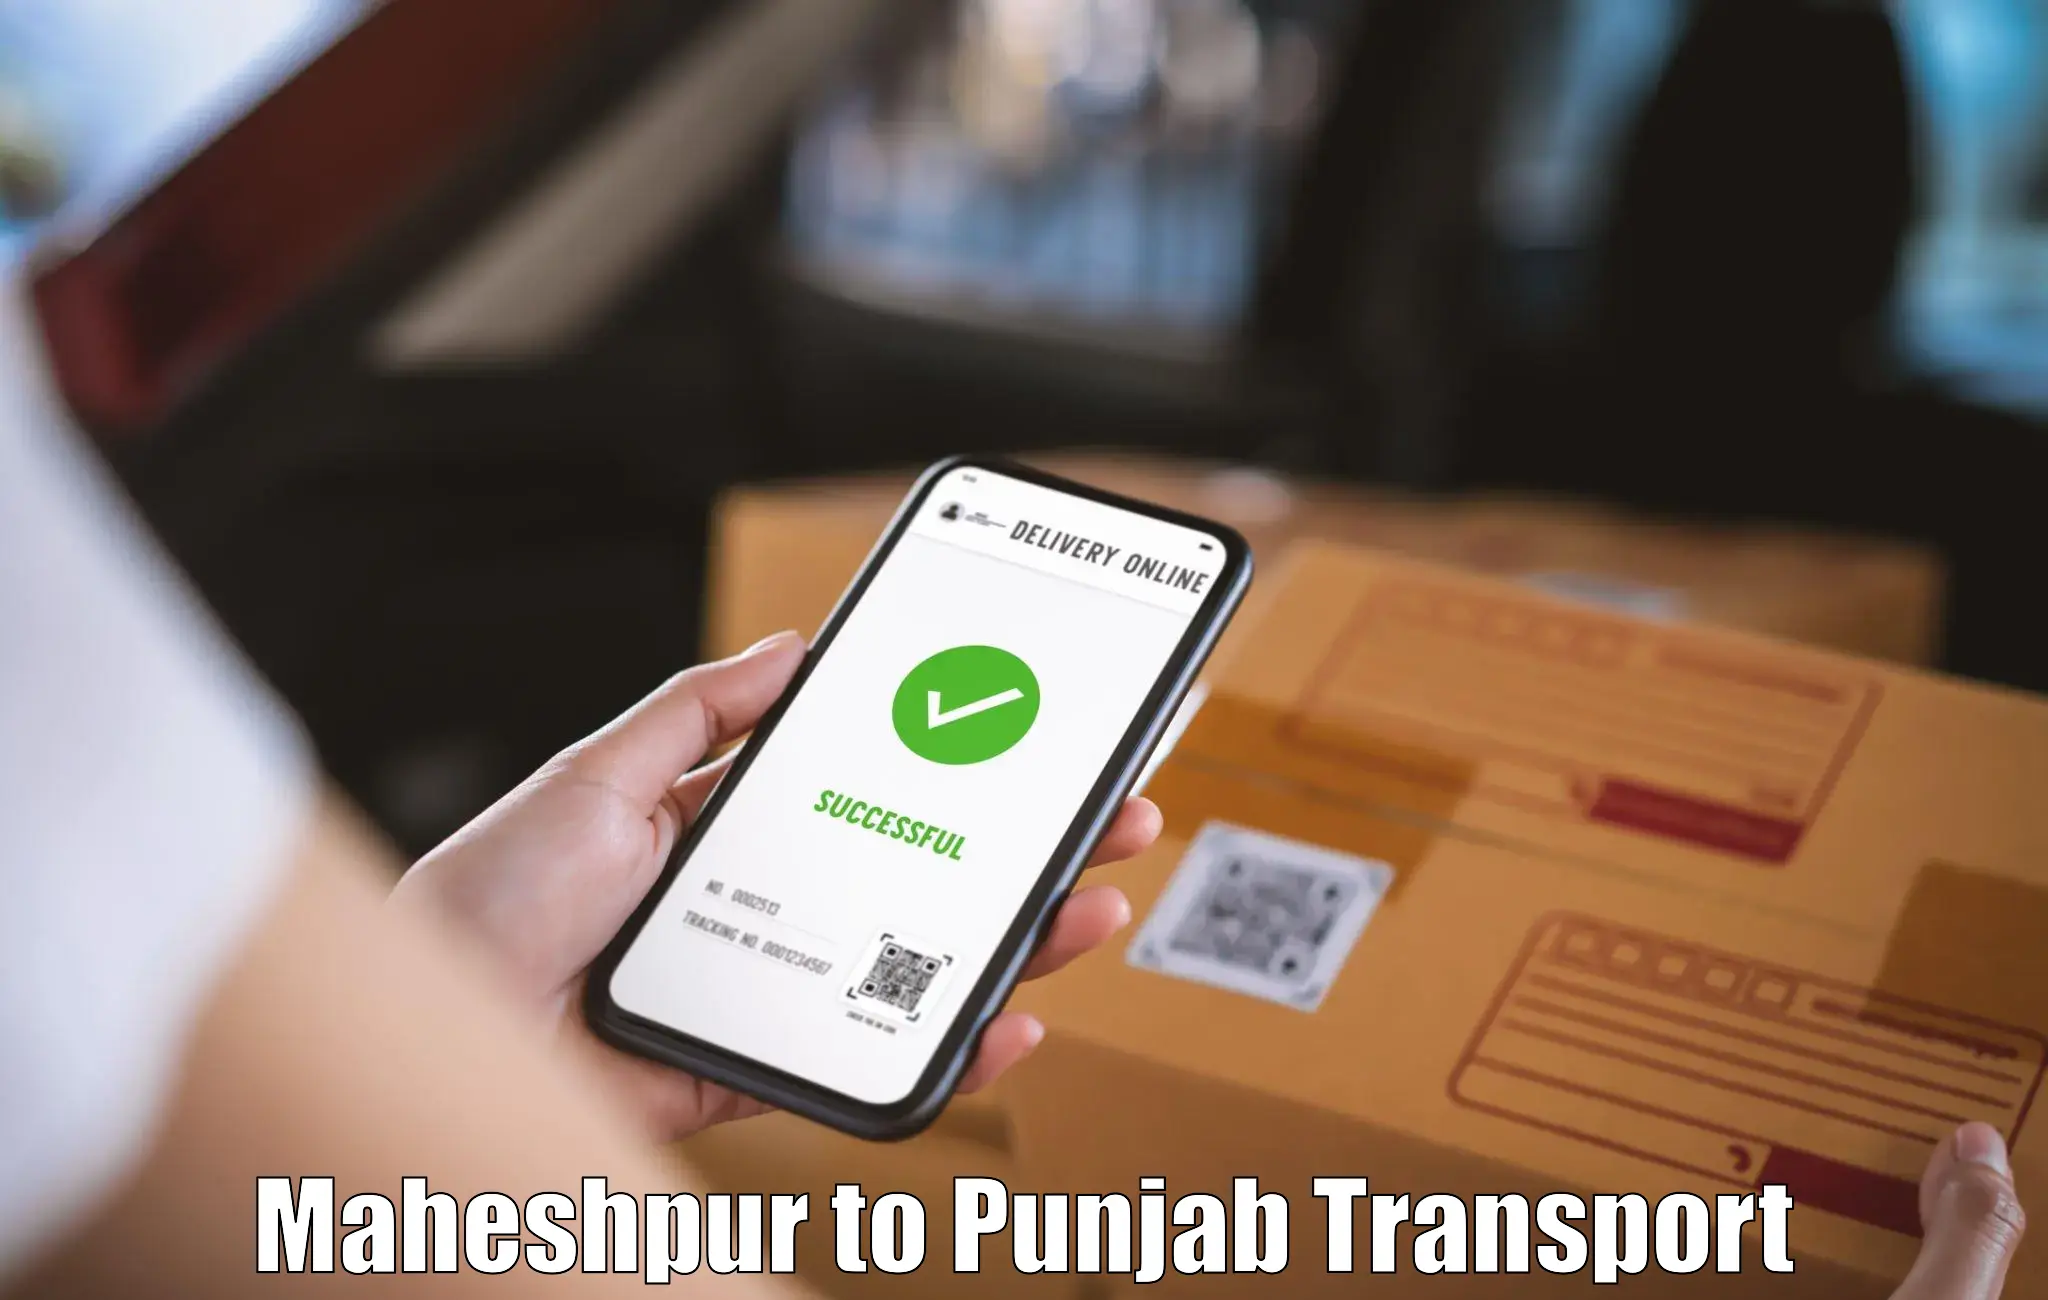 Domestic transport services Maheshpur to Amritsar